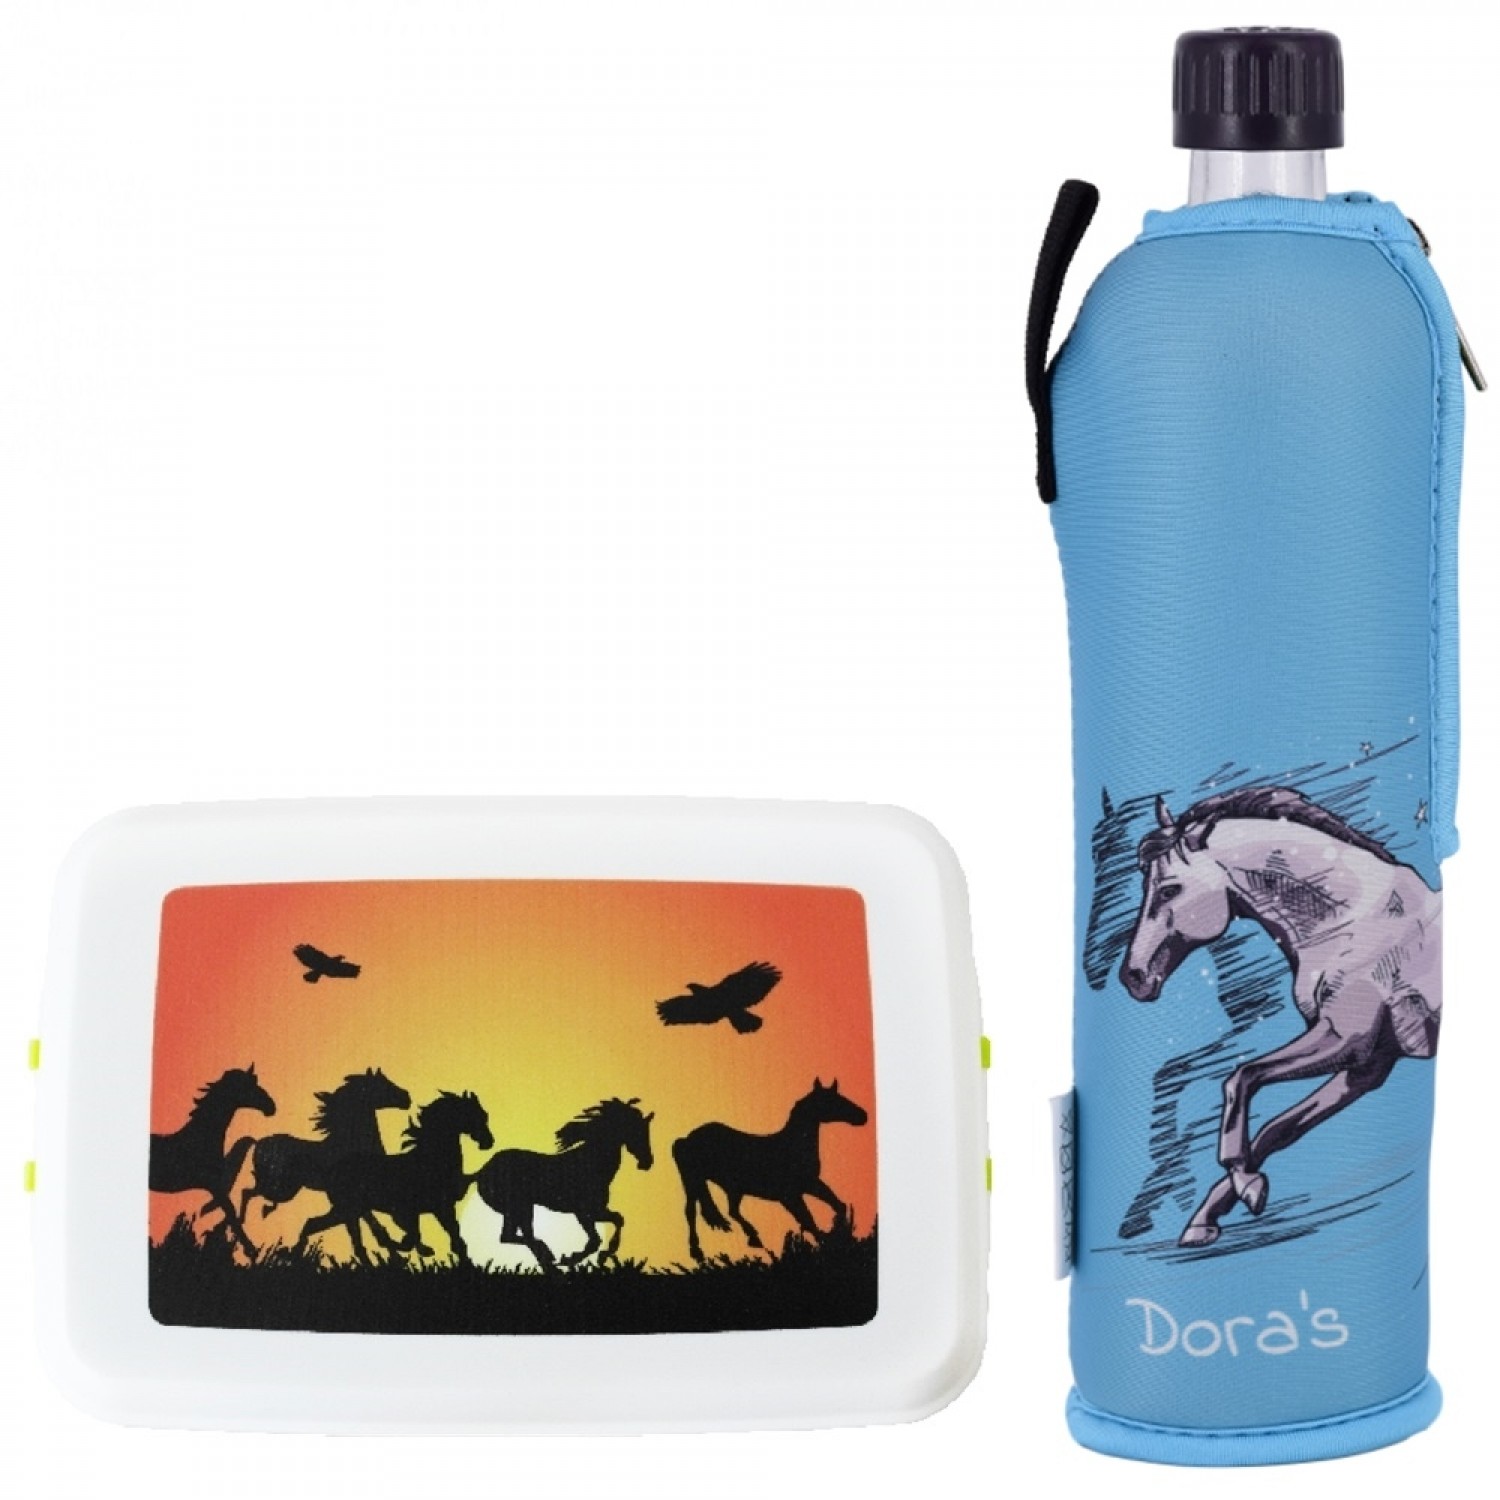 Doras’ Equestrian Sports Set »Horse« drinking bottle & lunchbox